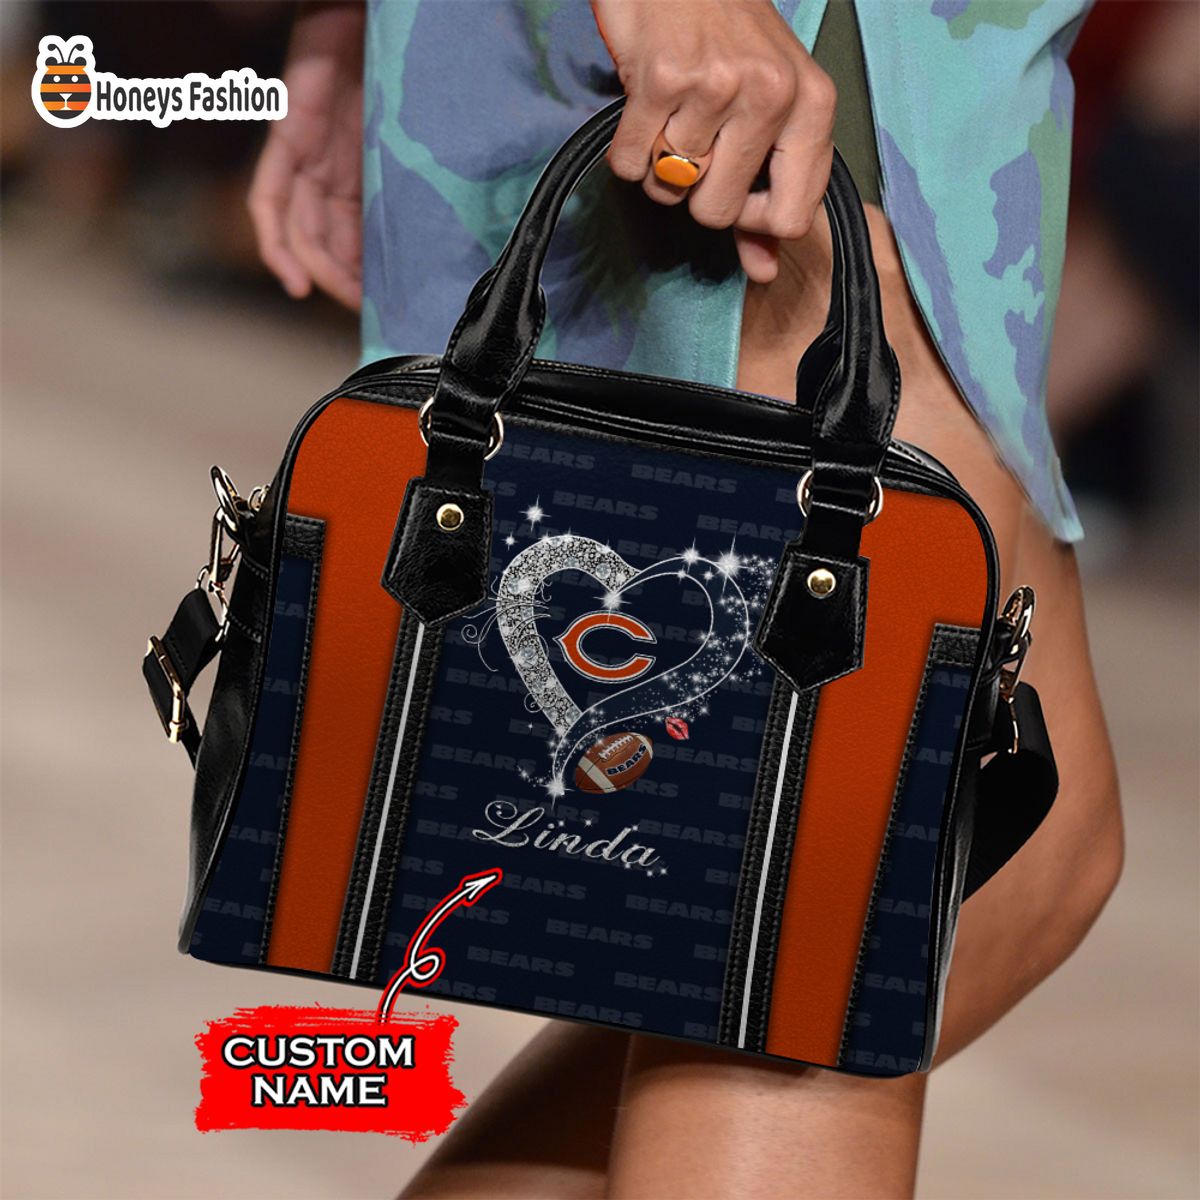 Chicago Bears NFL Custom Name Leather Handbag Tote bag